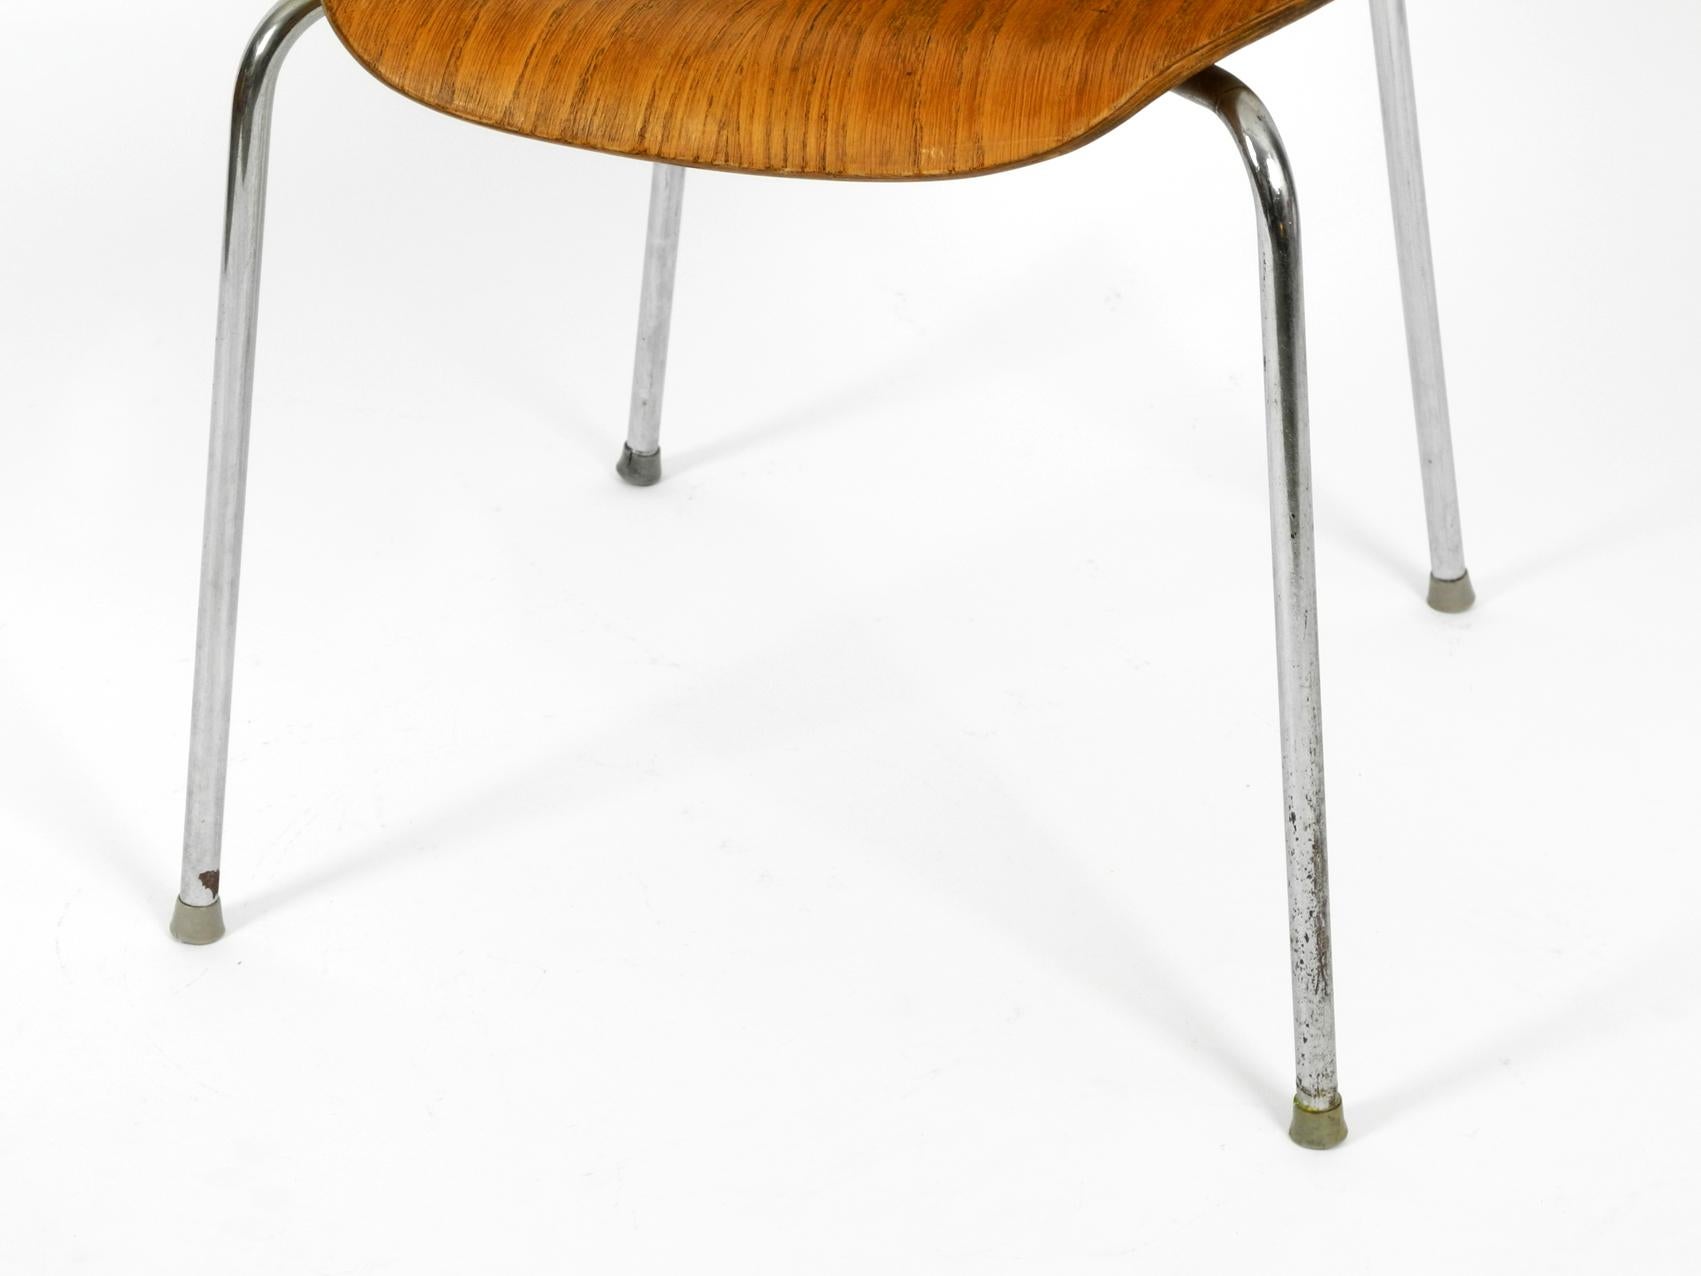 Set of 6 teak plywood chairs by Herbert Hirche for Jofa Stalmobler Denmark 1